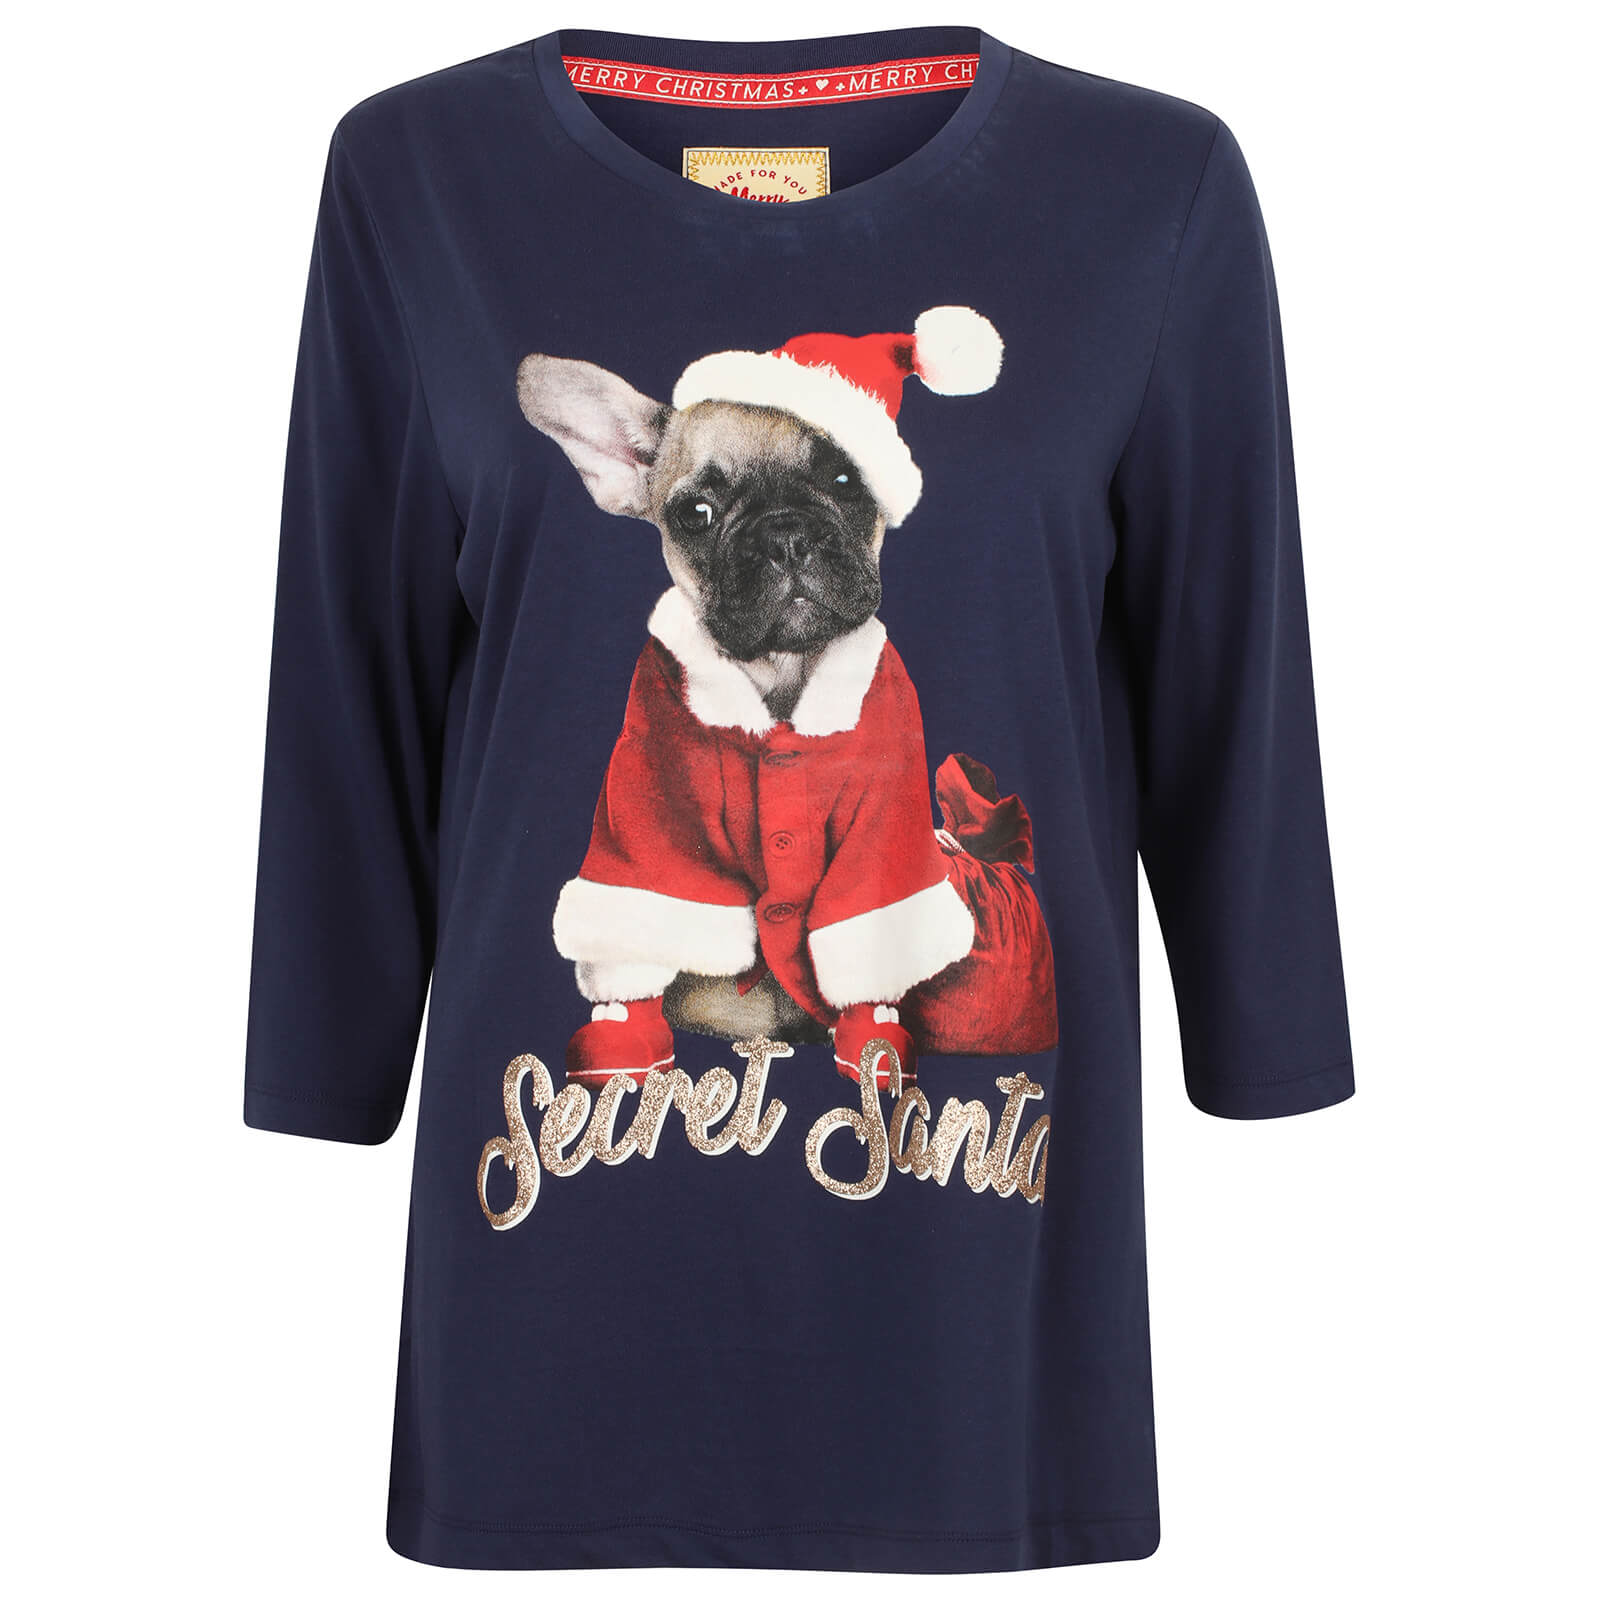 Mr Crimbo Womens Christmas Top 3/4 Sleeve Secret Santa Puppy - MrCrimbo.co.uk -SRG3C12019_A - Navy -Blue